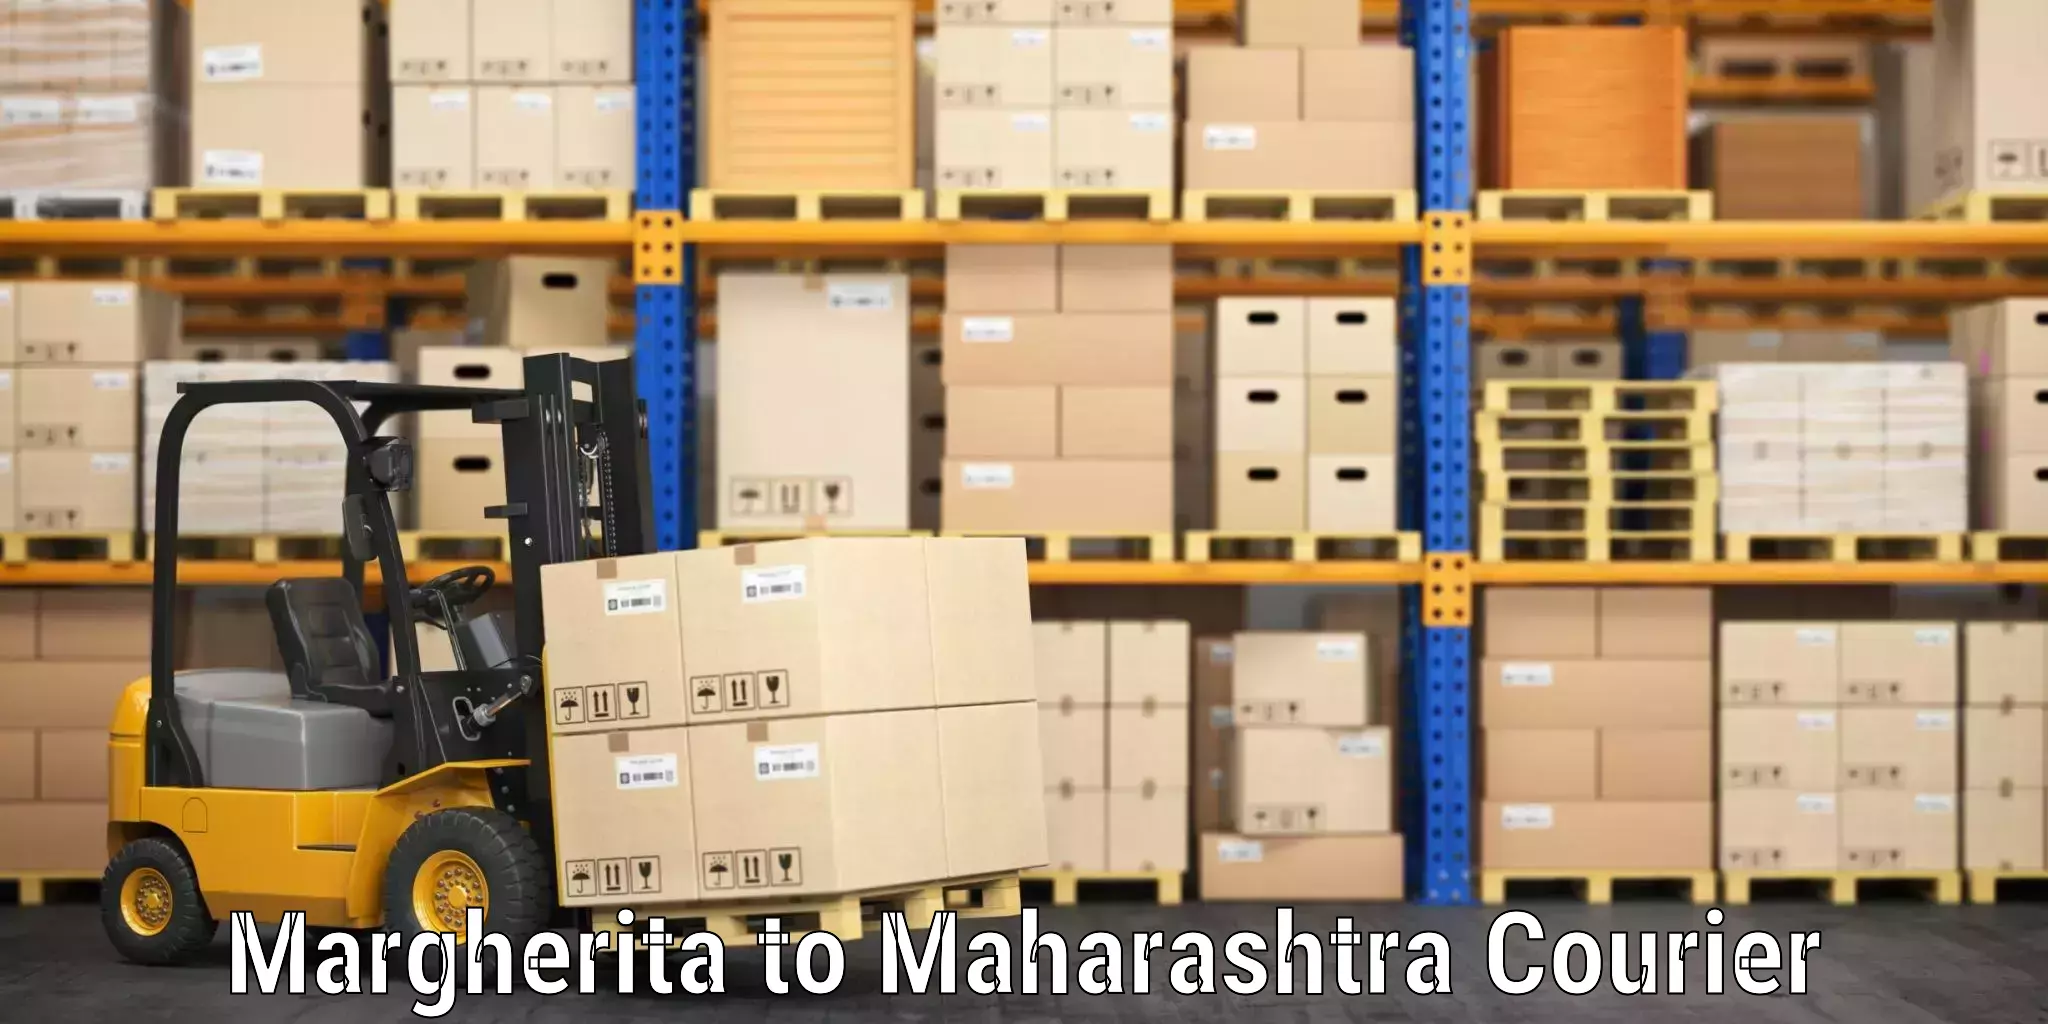 Luggage delivery app Margherita to Maharashtra